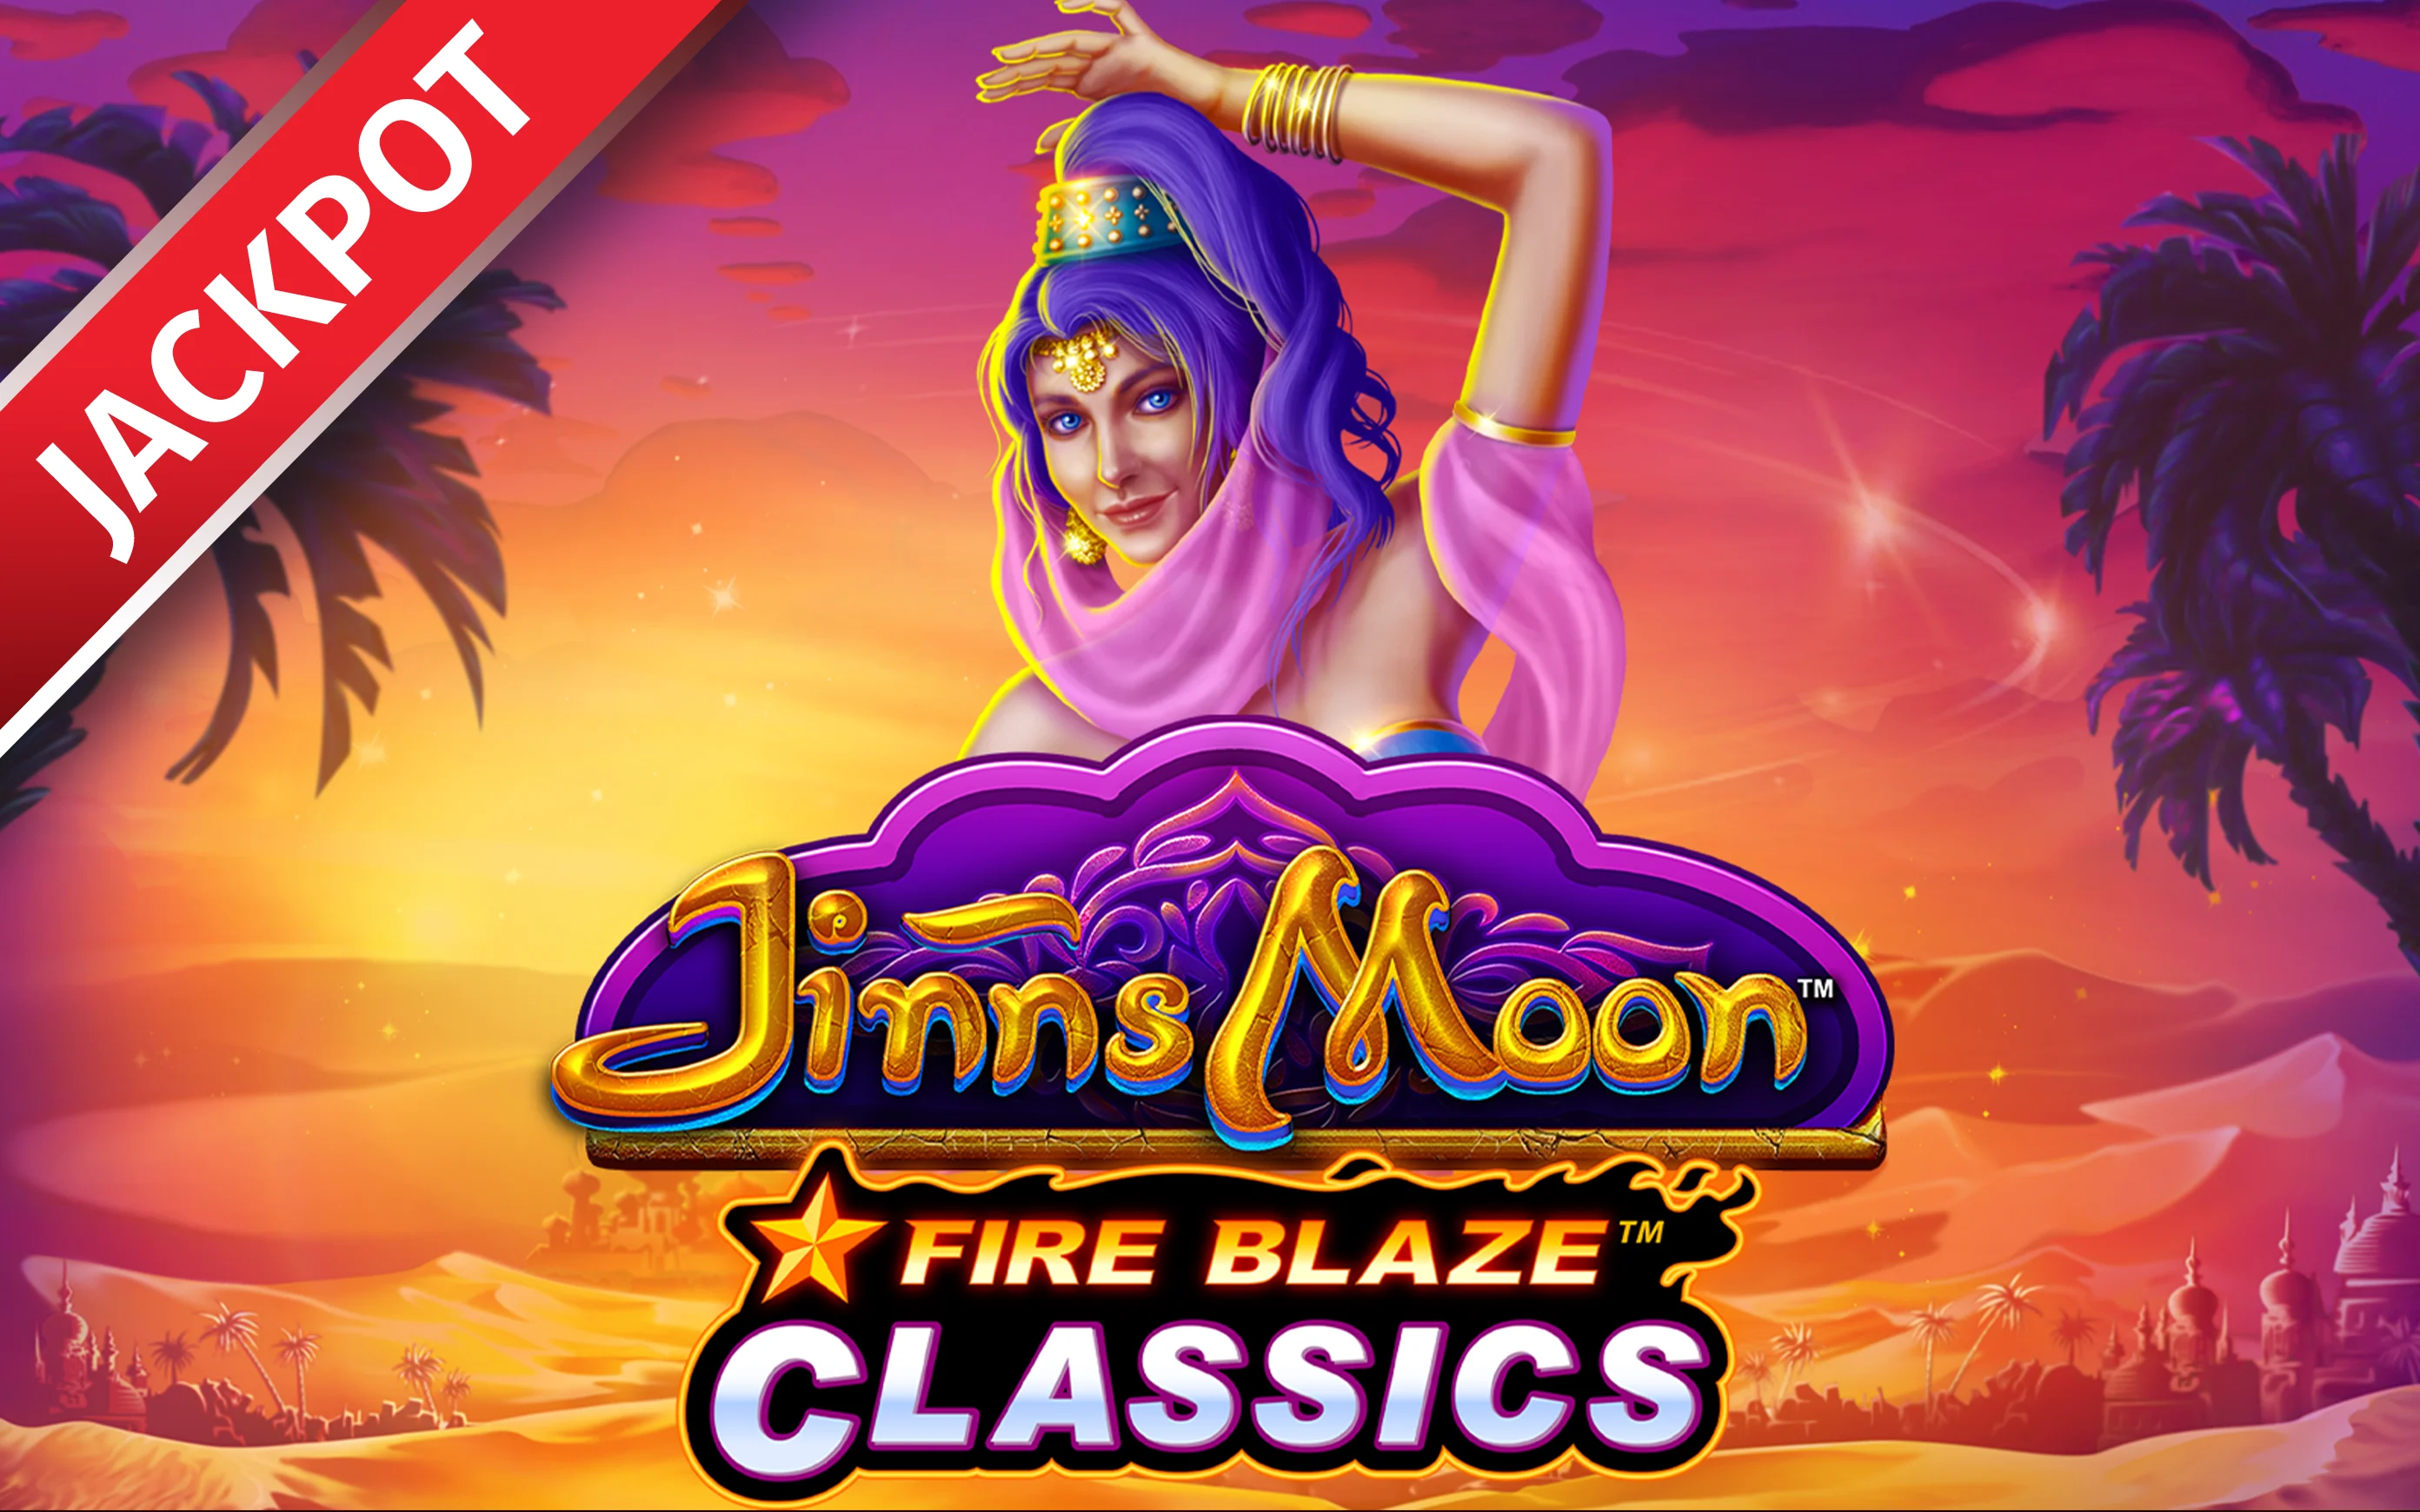 Play Fire Blaze: Jinns Moon on Starcasino.be online casino